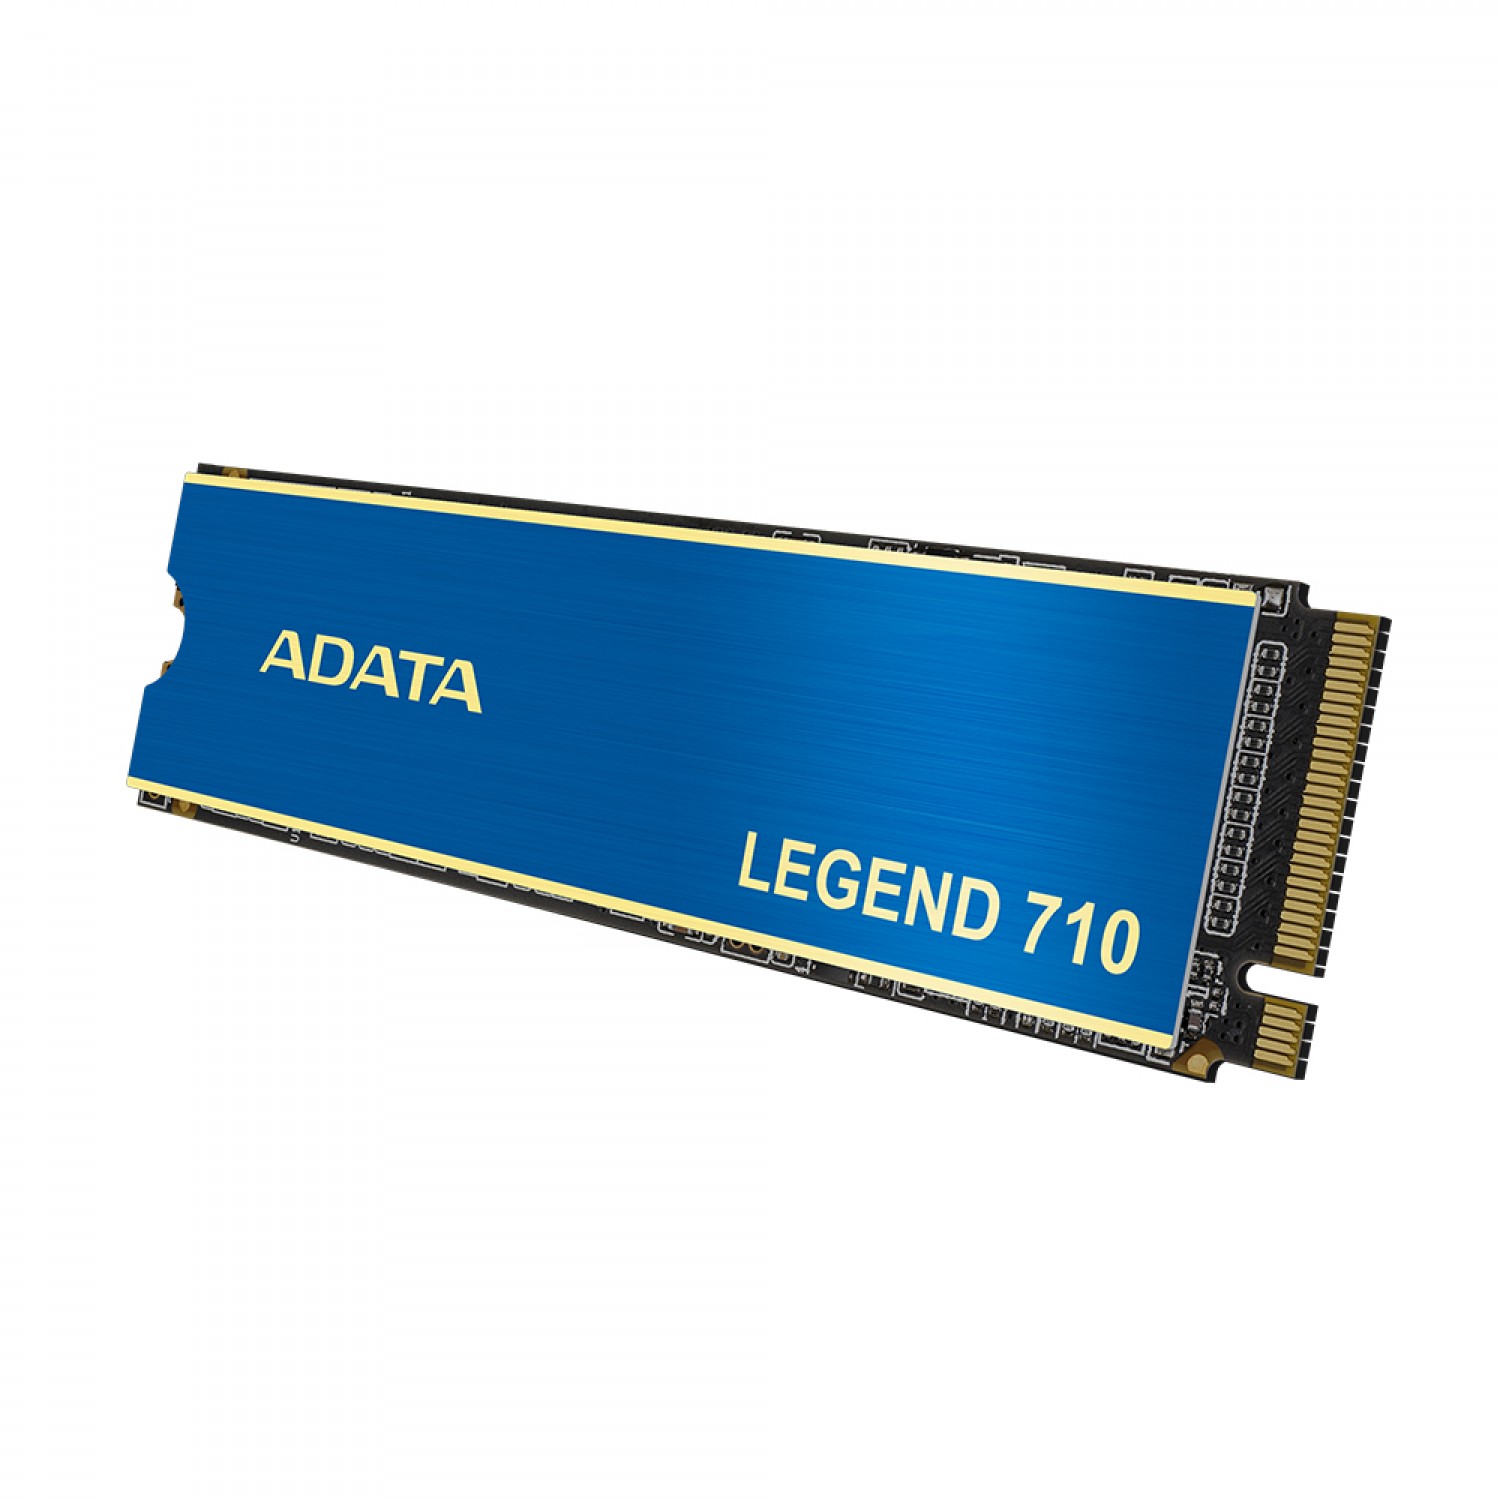 حافظه اس اس دی ADATA Legend 710 256GB-3